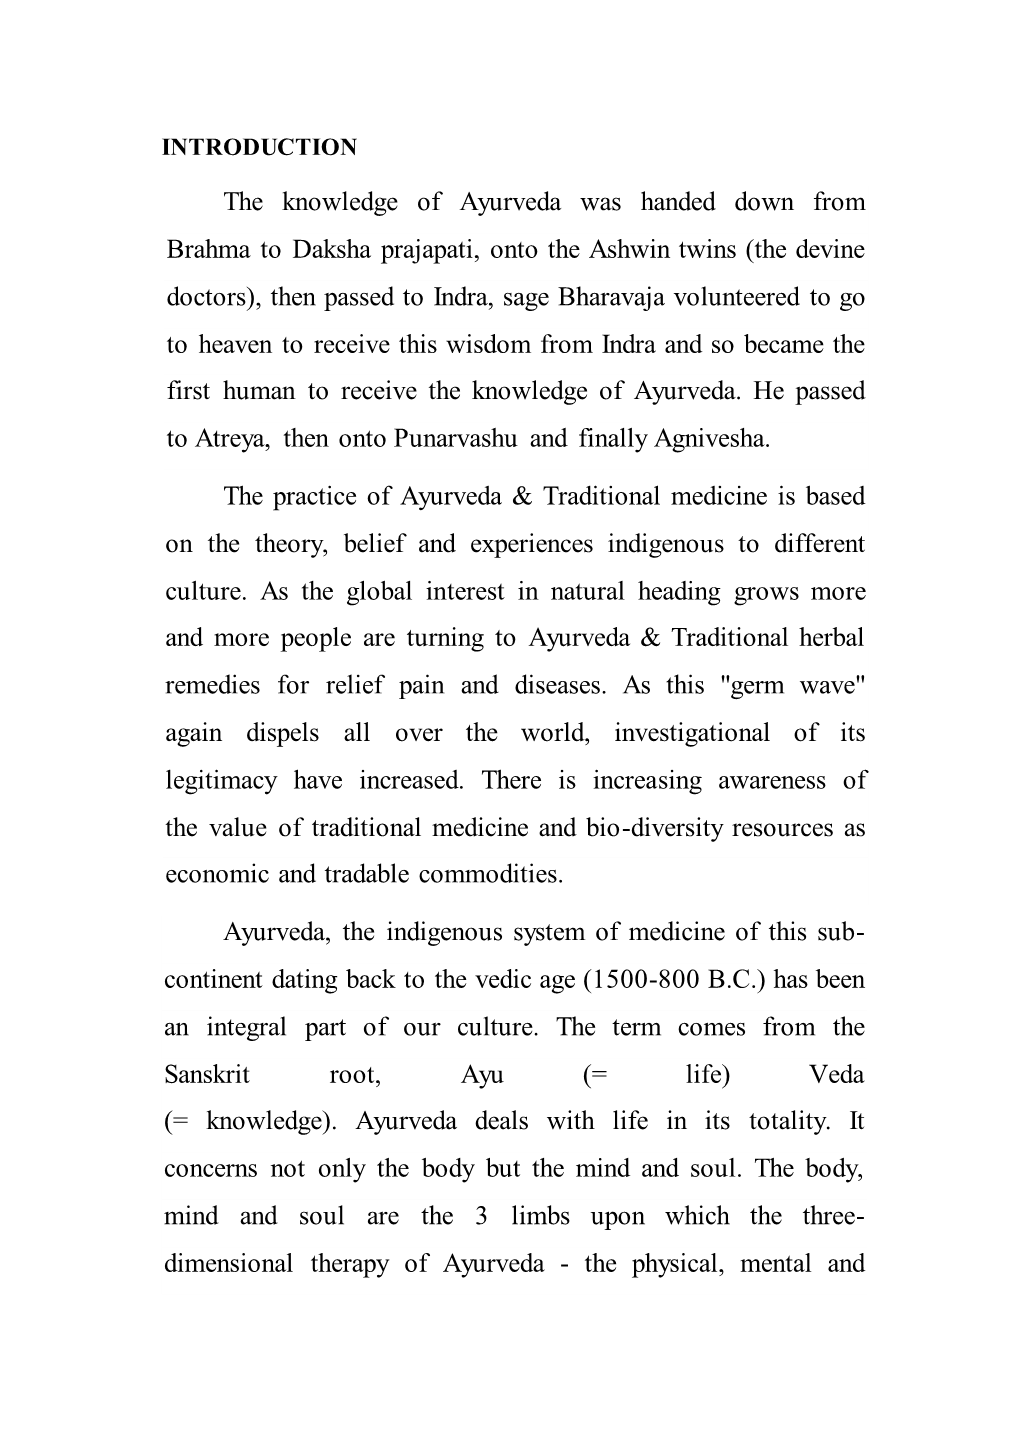 The Knowledge of Ayurveda Was Handed Down from Brahma to Daksha Prajapati, Onto the Ashwin Twins